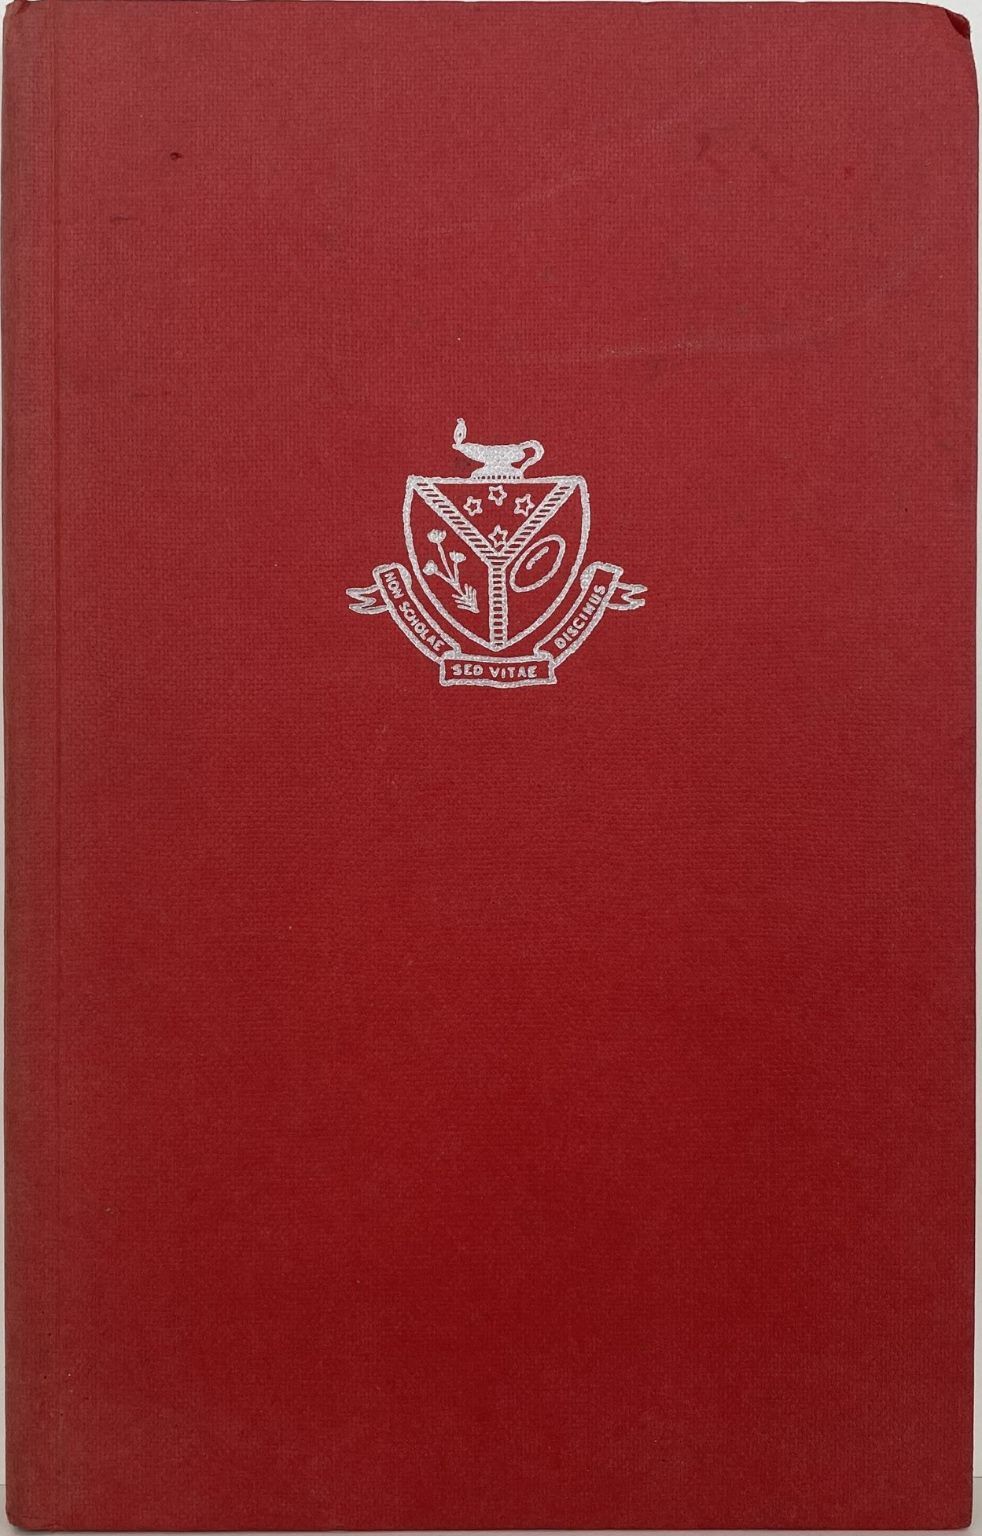 SOUTHLAND BOYS HIGH SCHOOL: Register Supplement 1957 - 1965